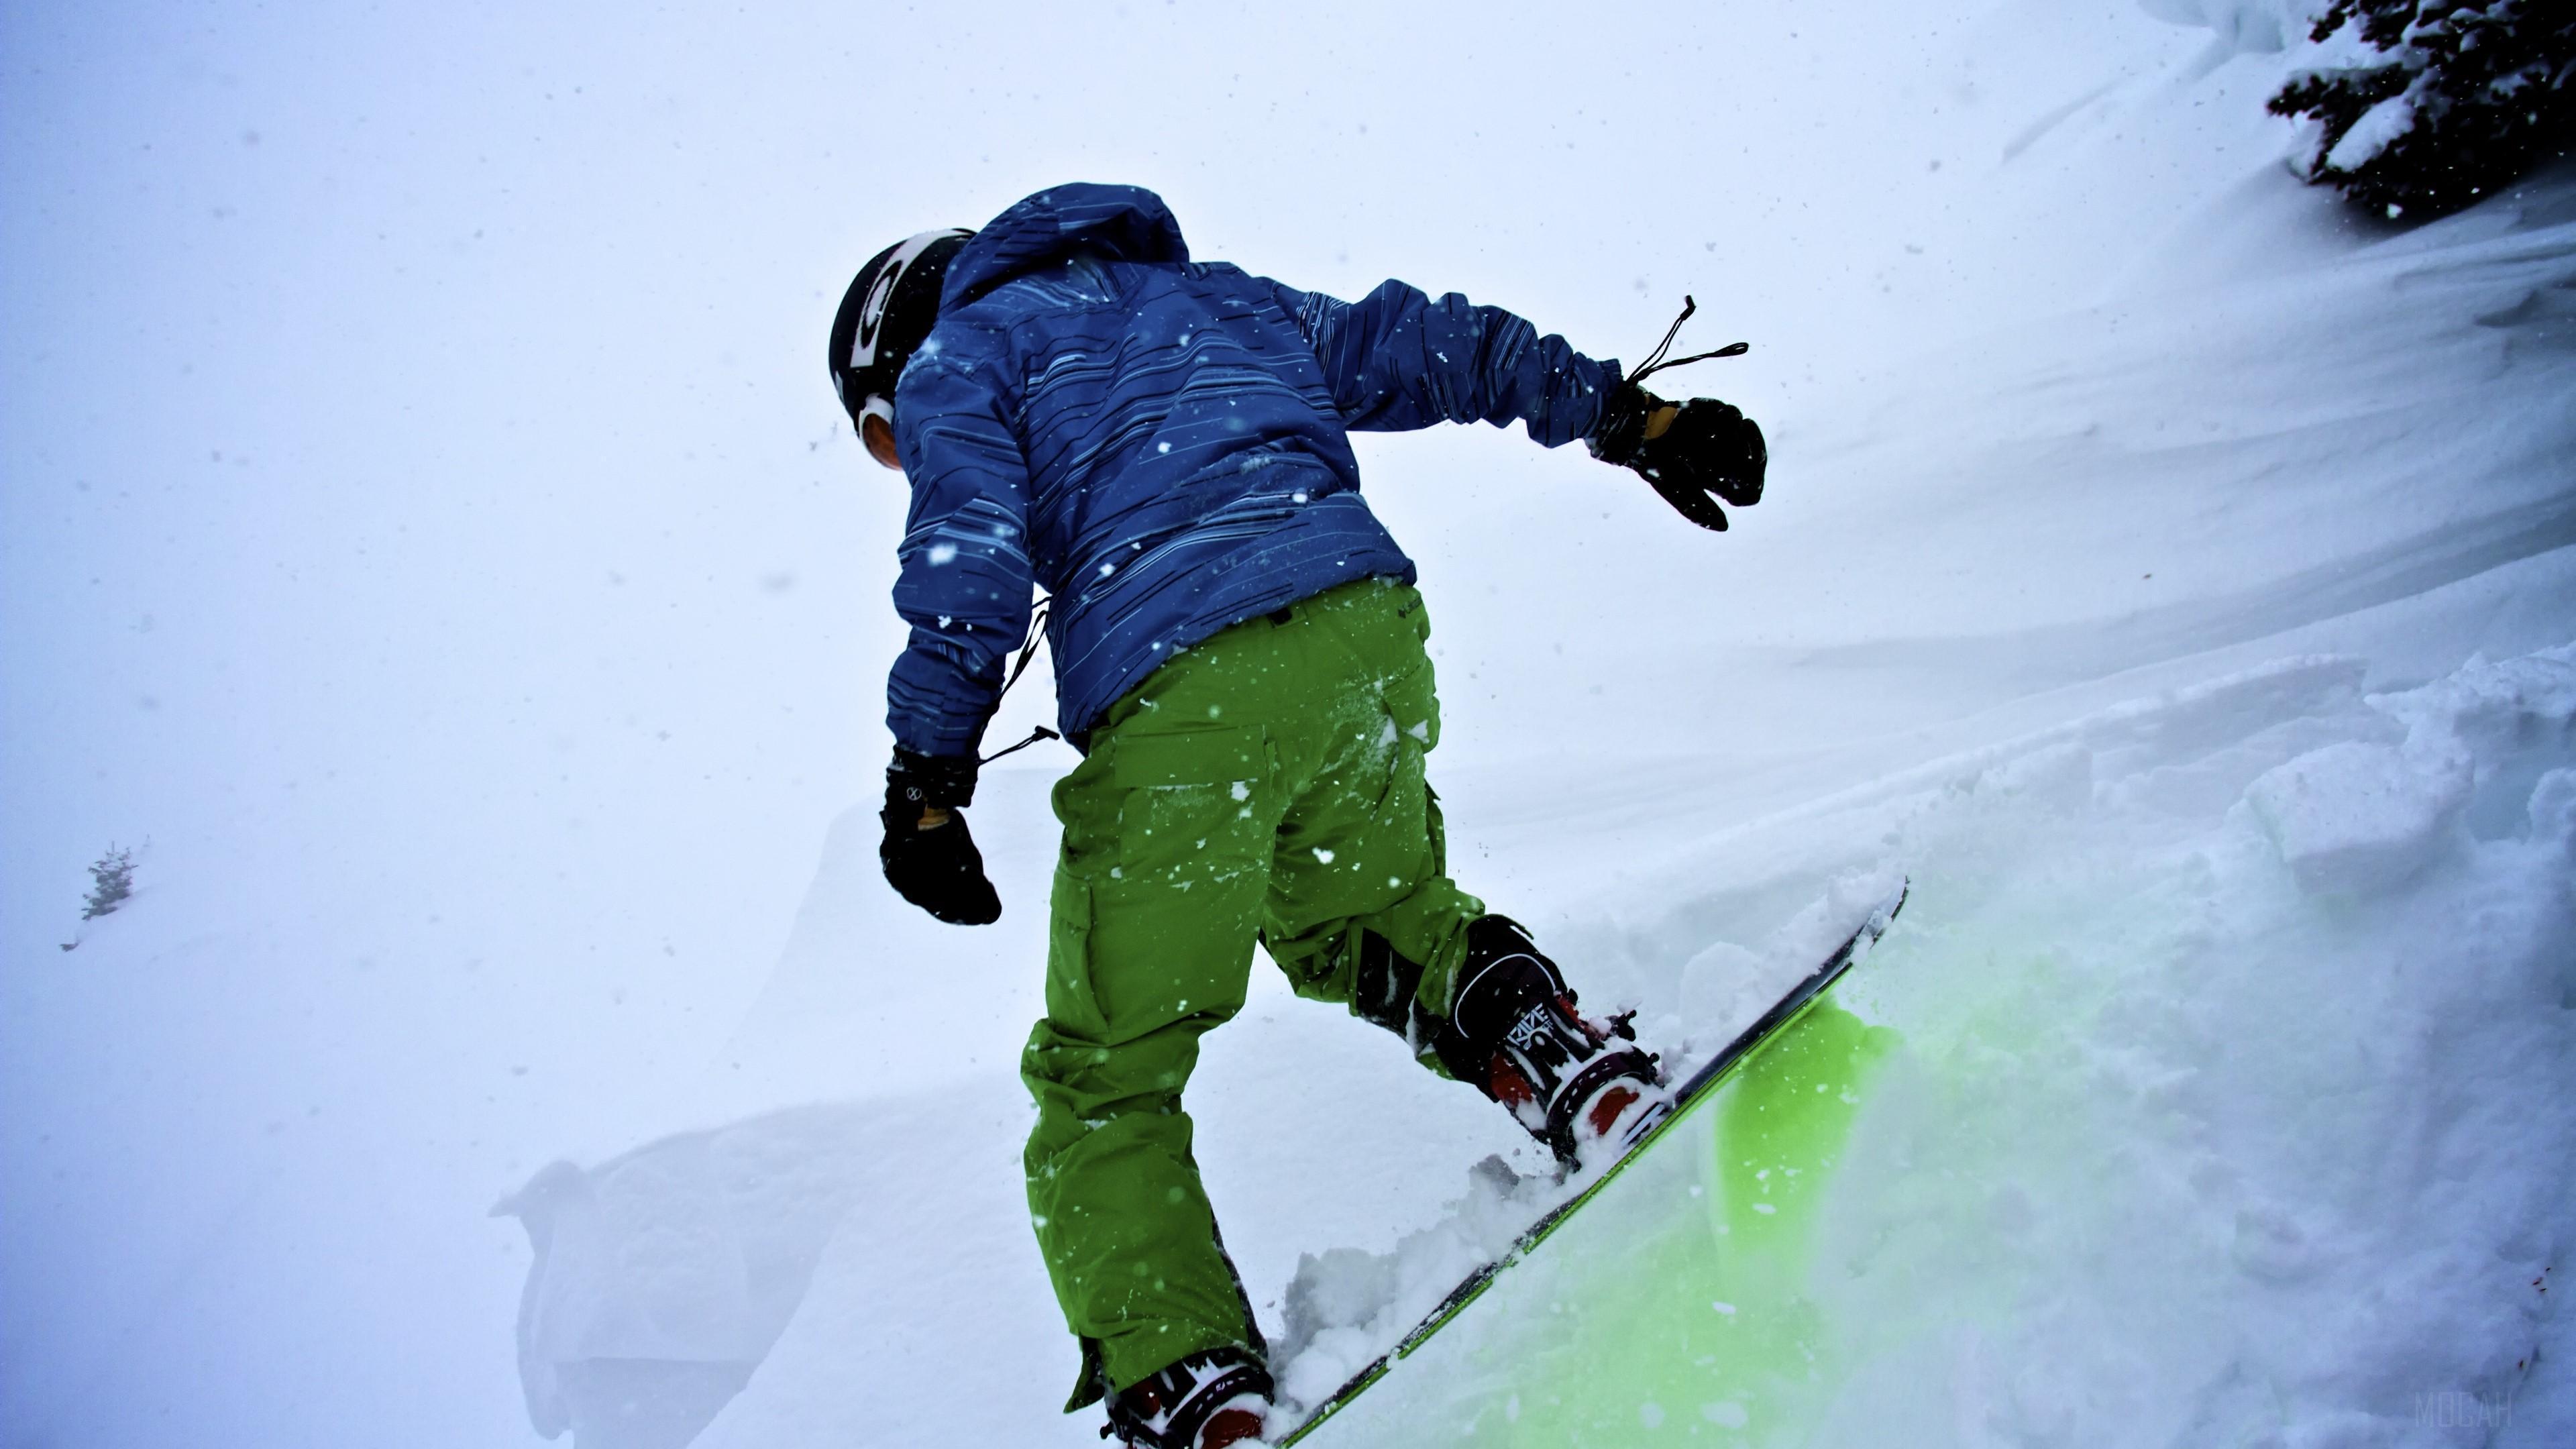 HD wallpaper, Snowboard, Winter 4K, Snowfall, Snowboarder